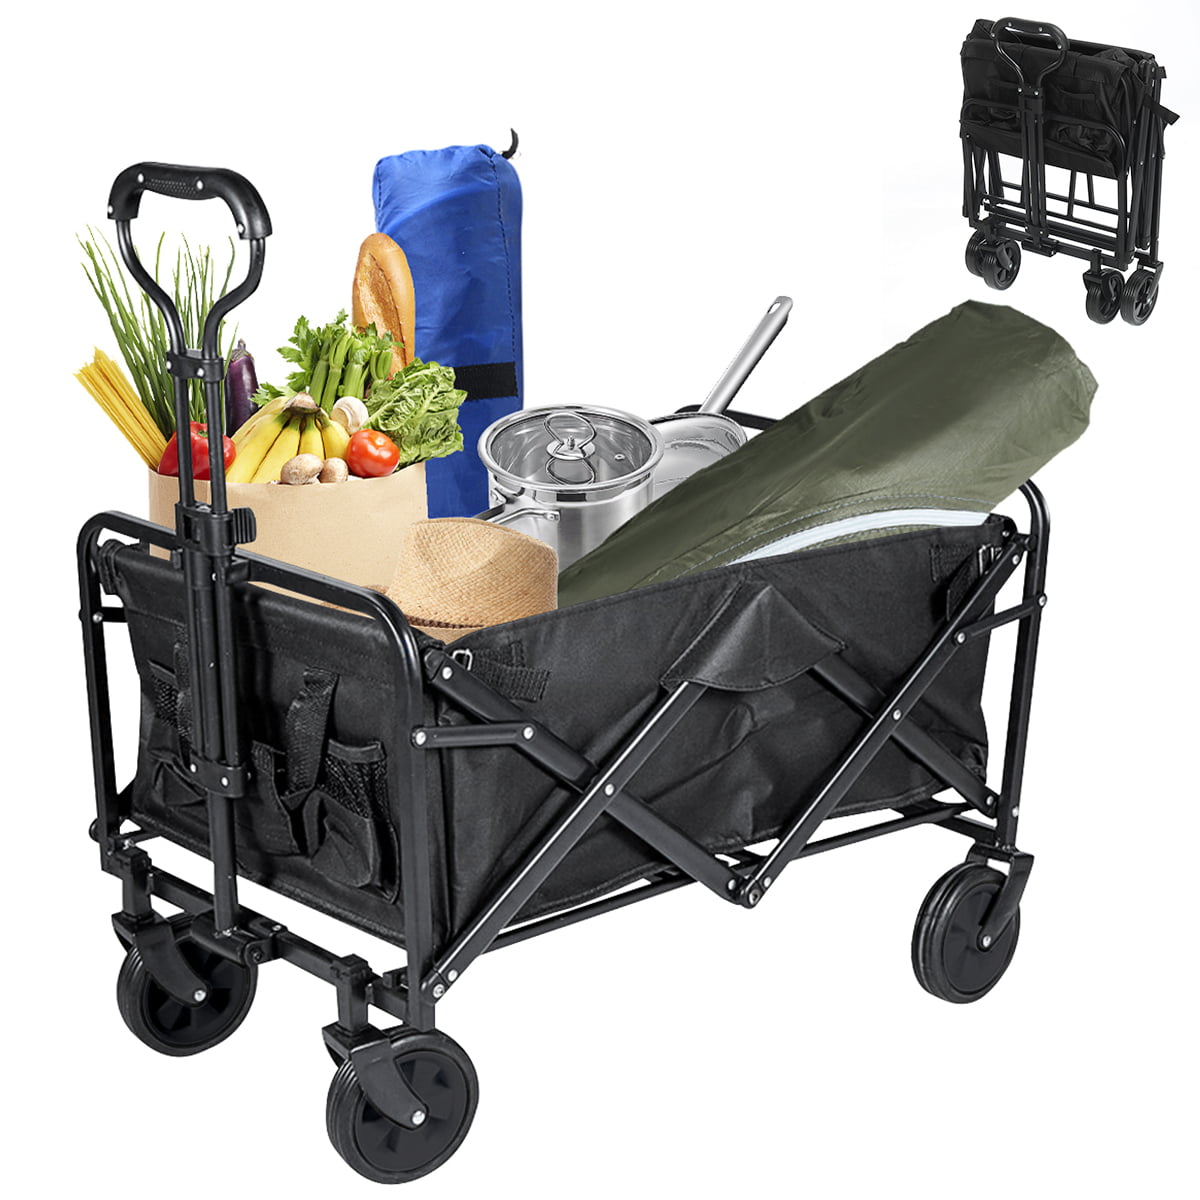 BXL Heavy Duty Collapsible Folding Garden Cart Utility Wagon for Shopping Outdoors Black 